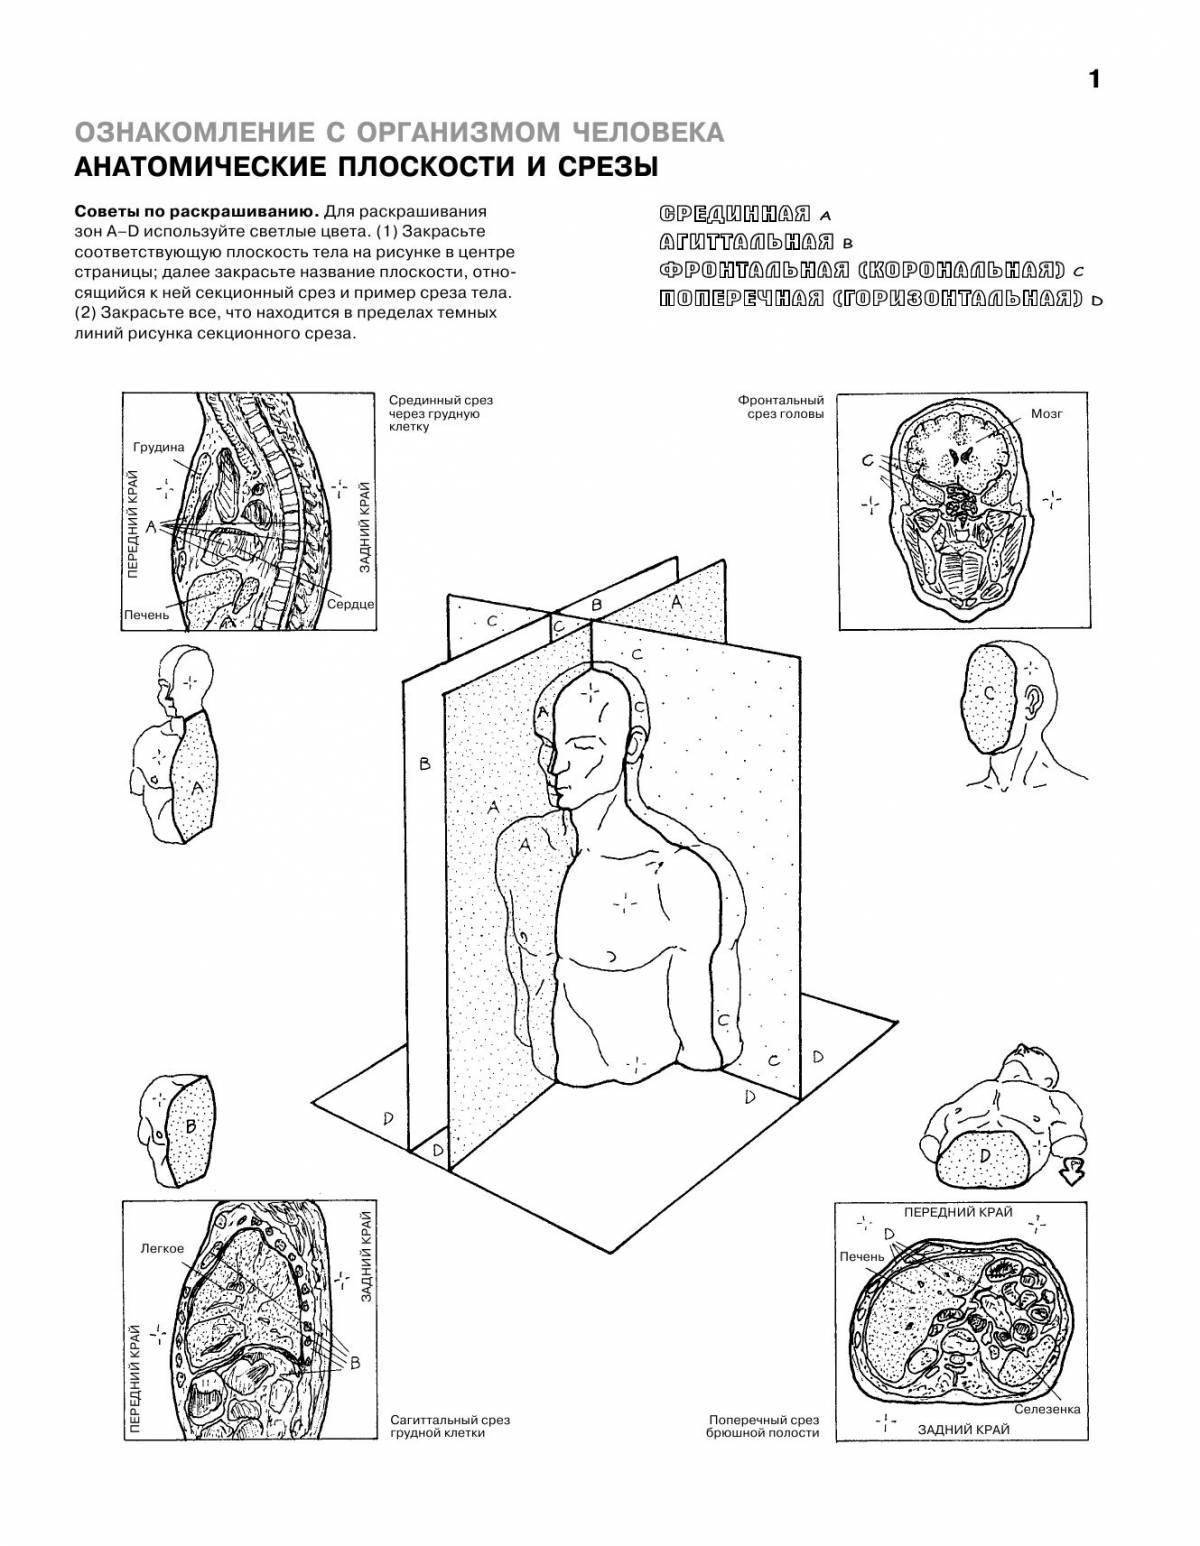 Анатомия человека: атлас-раскраска Элсон